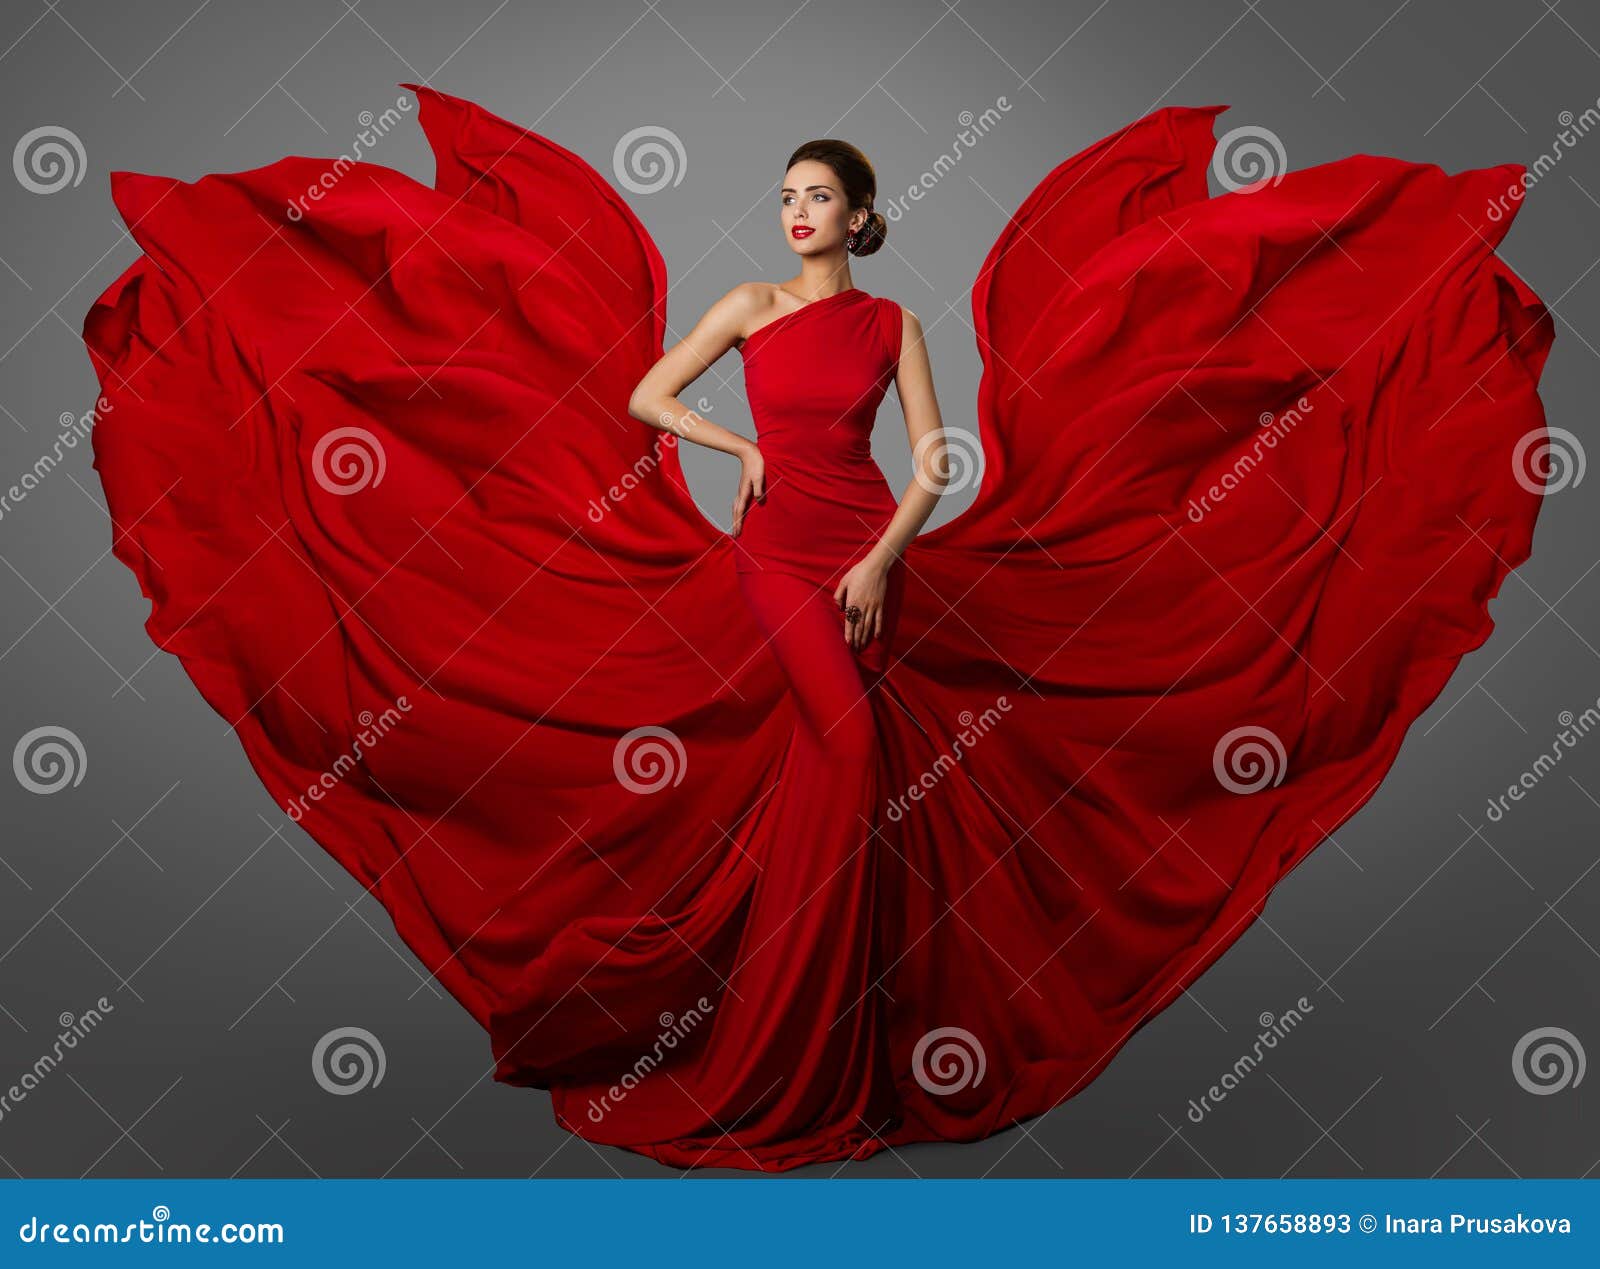 woman red dress, fashion model in long silk waving gown wings, flying fluttering fabric